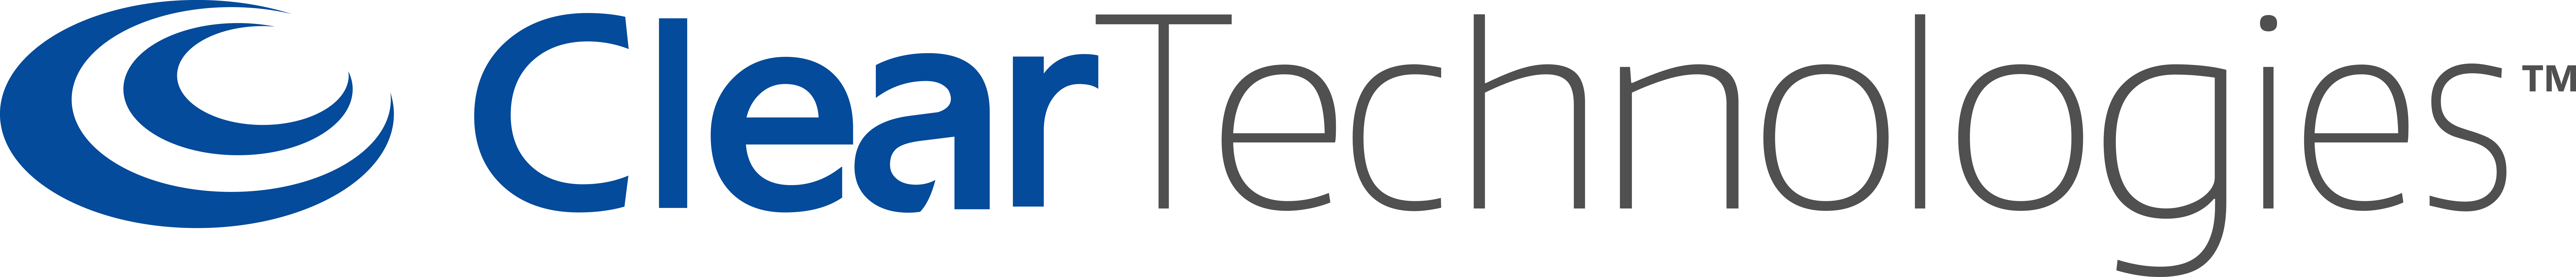 Clear Technologies Company Logo